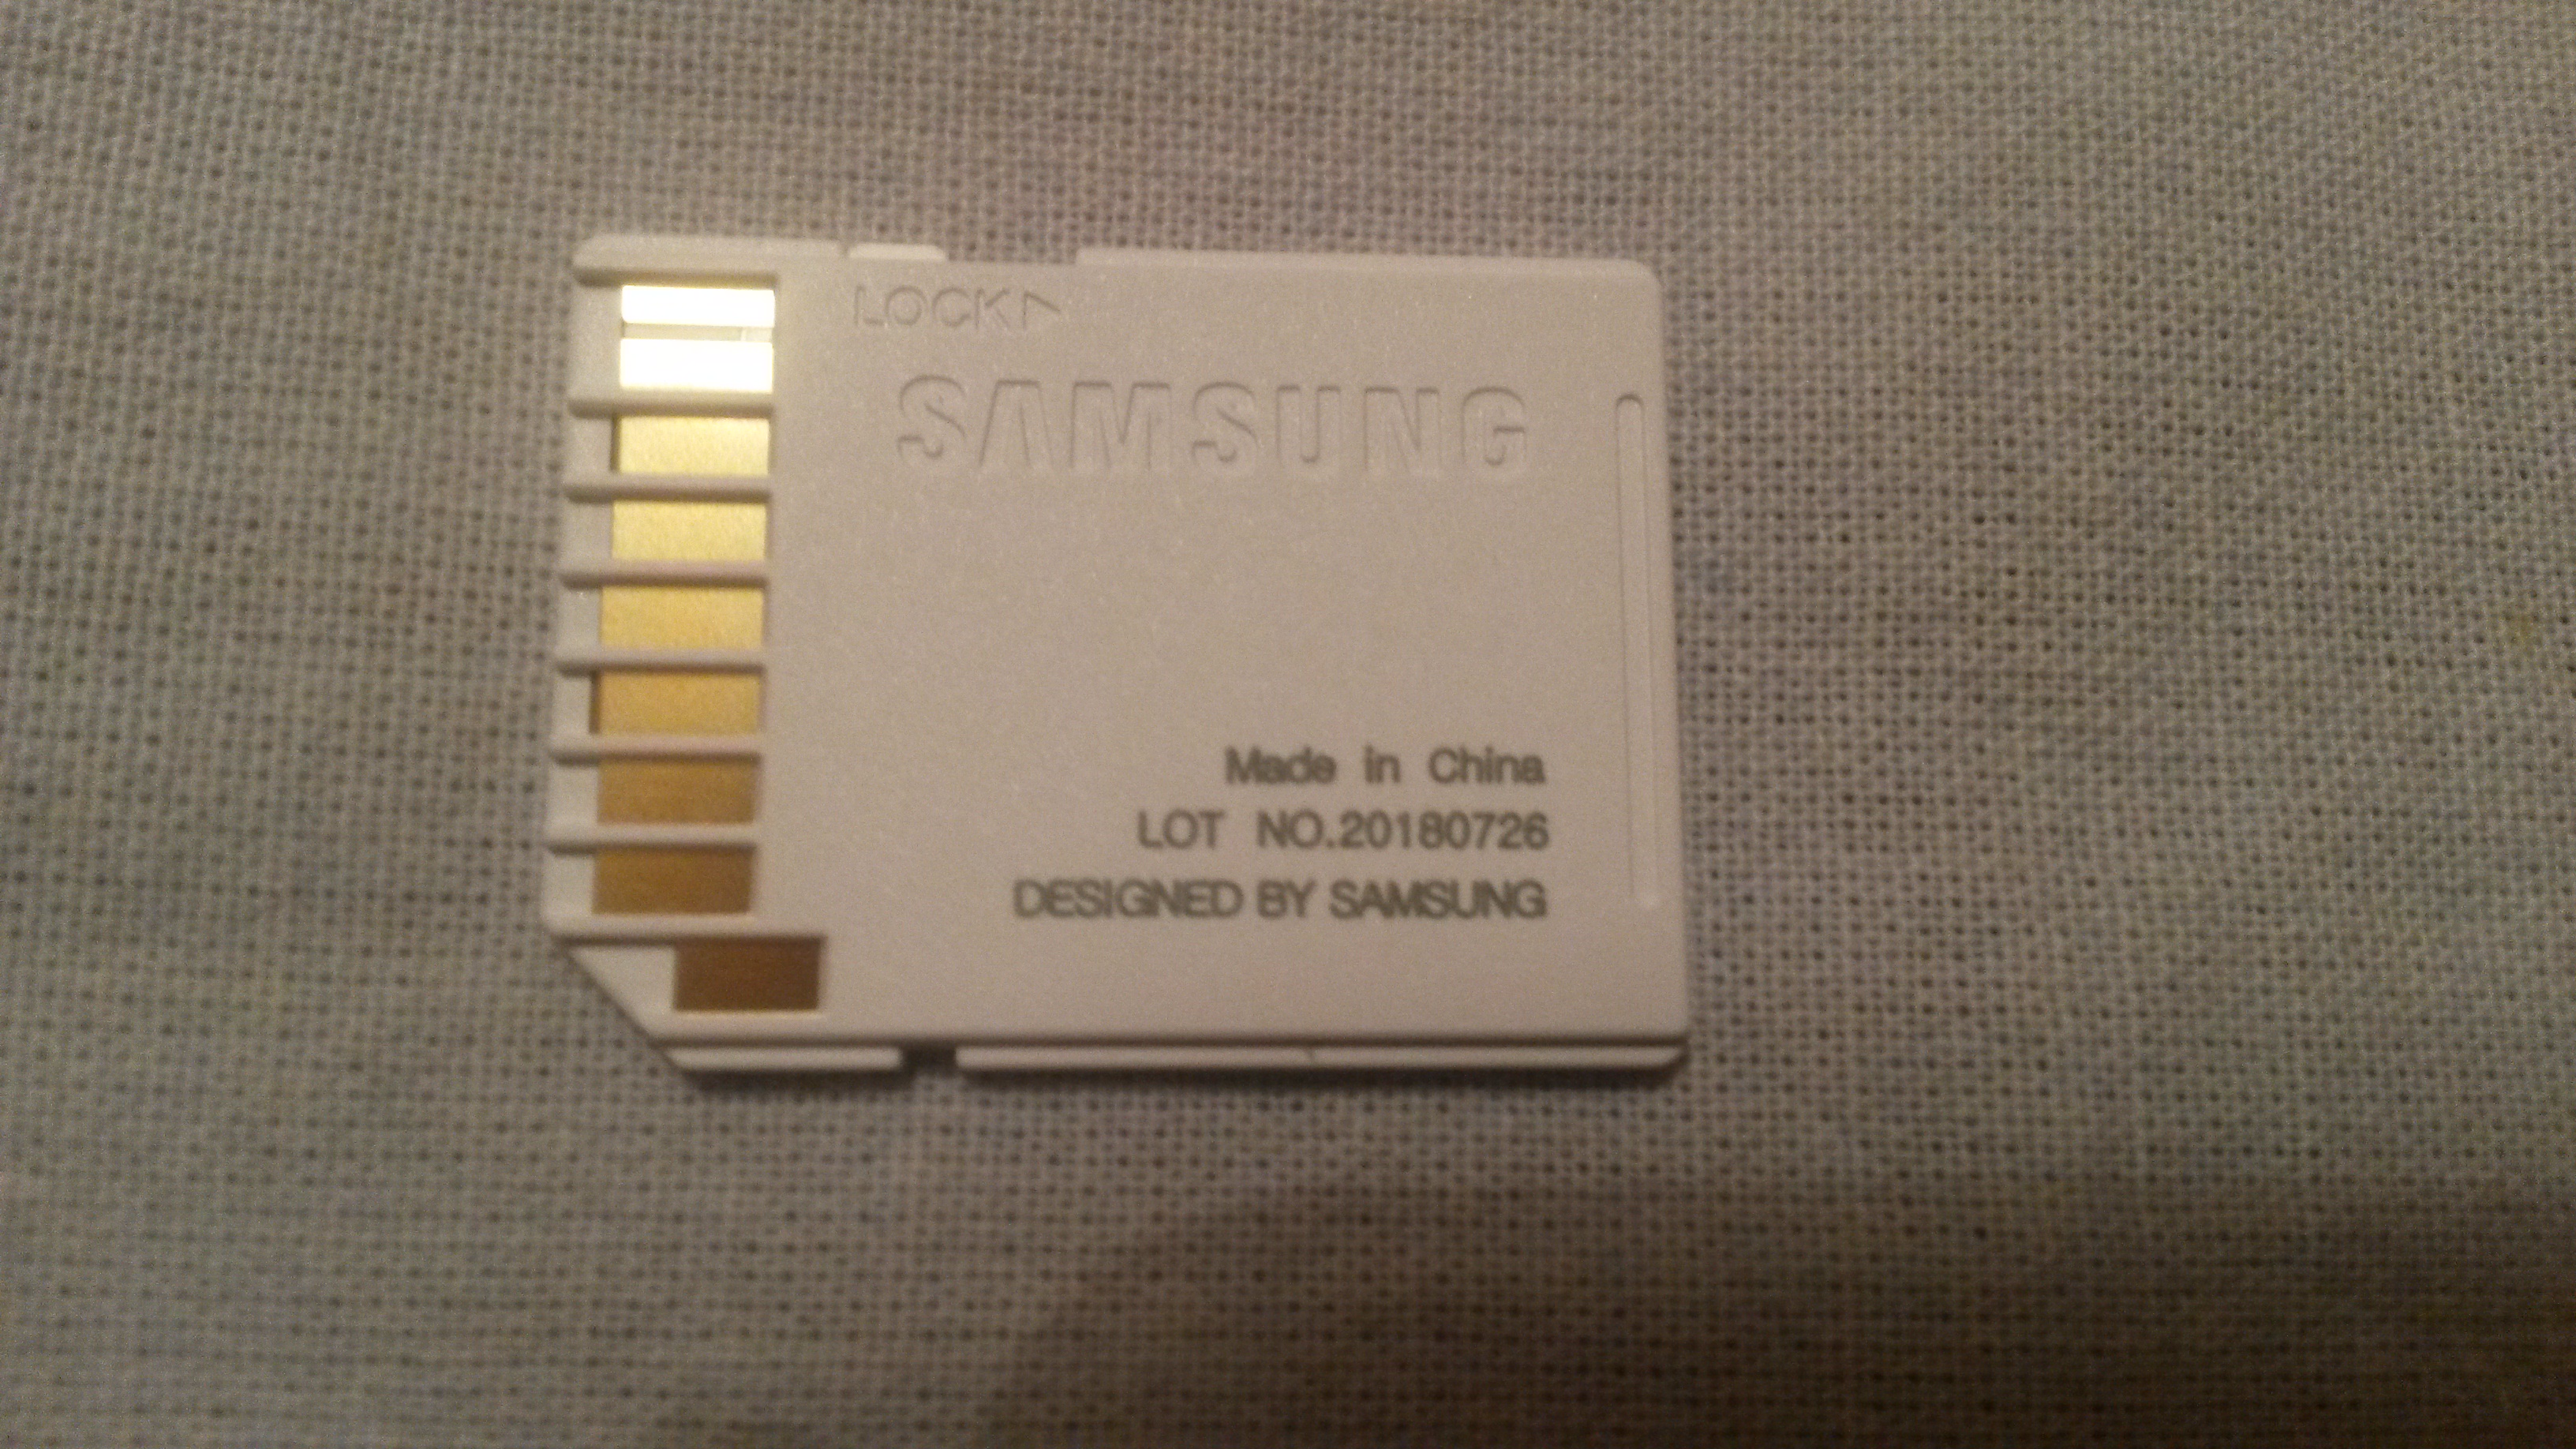 Samsung Evo Plus MB-MC32GA/EU made in China-real or fake? - Samsung  Community